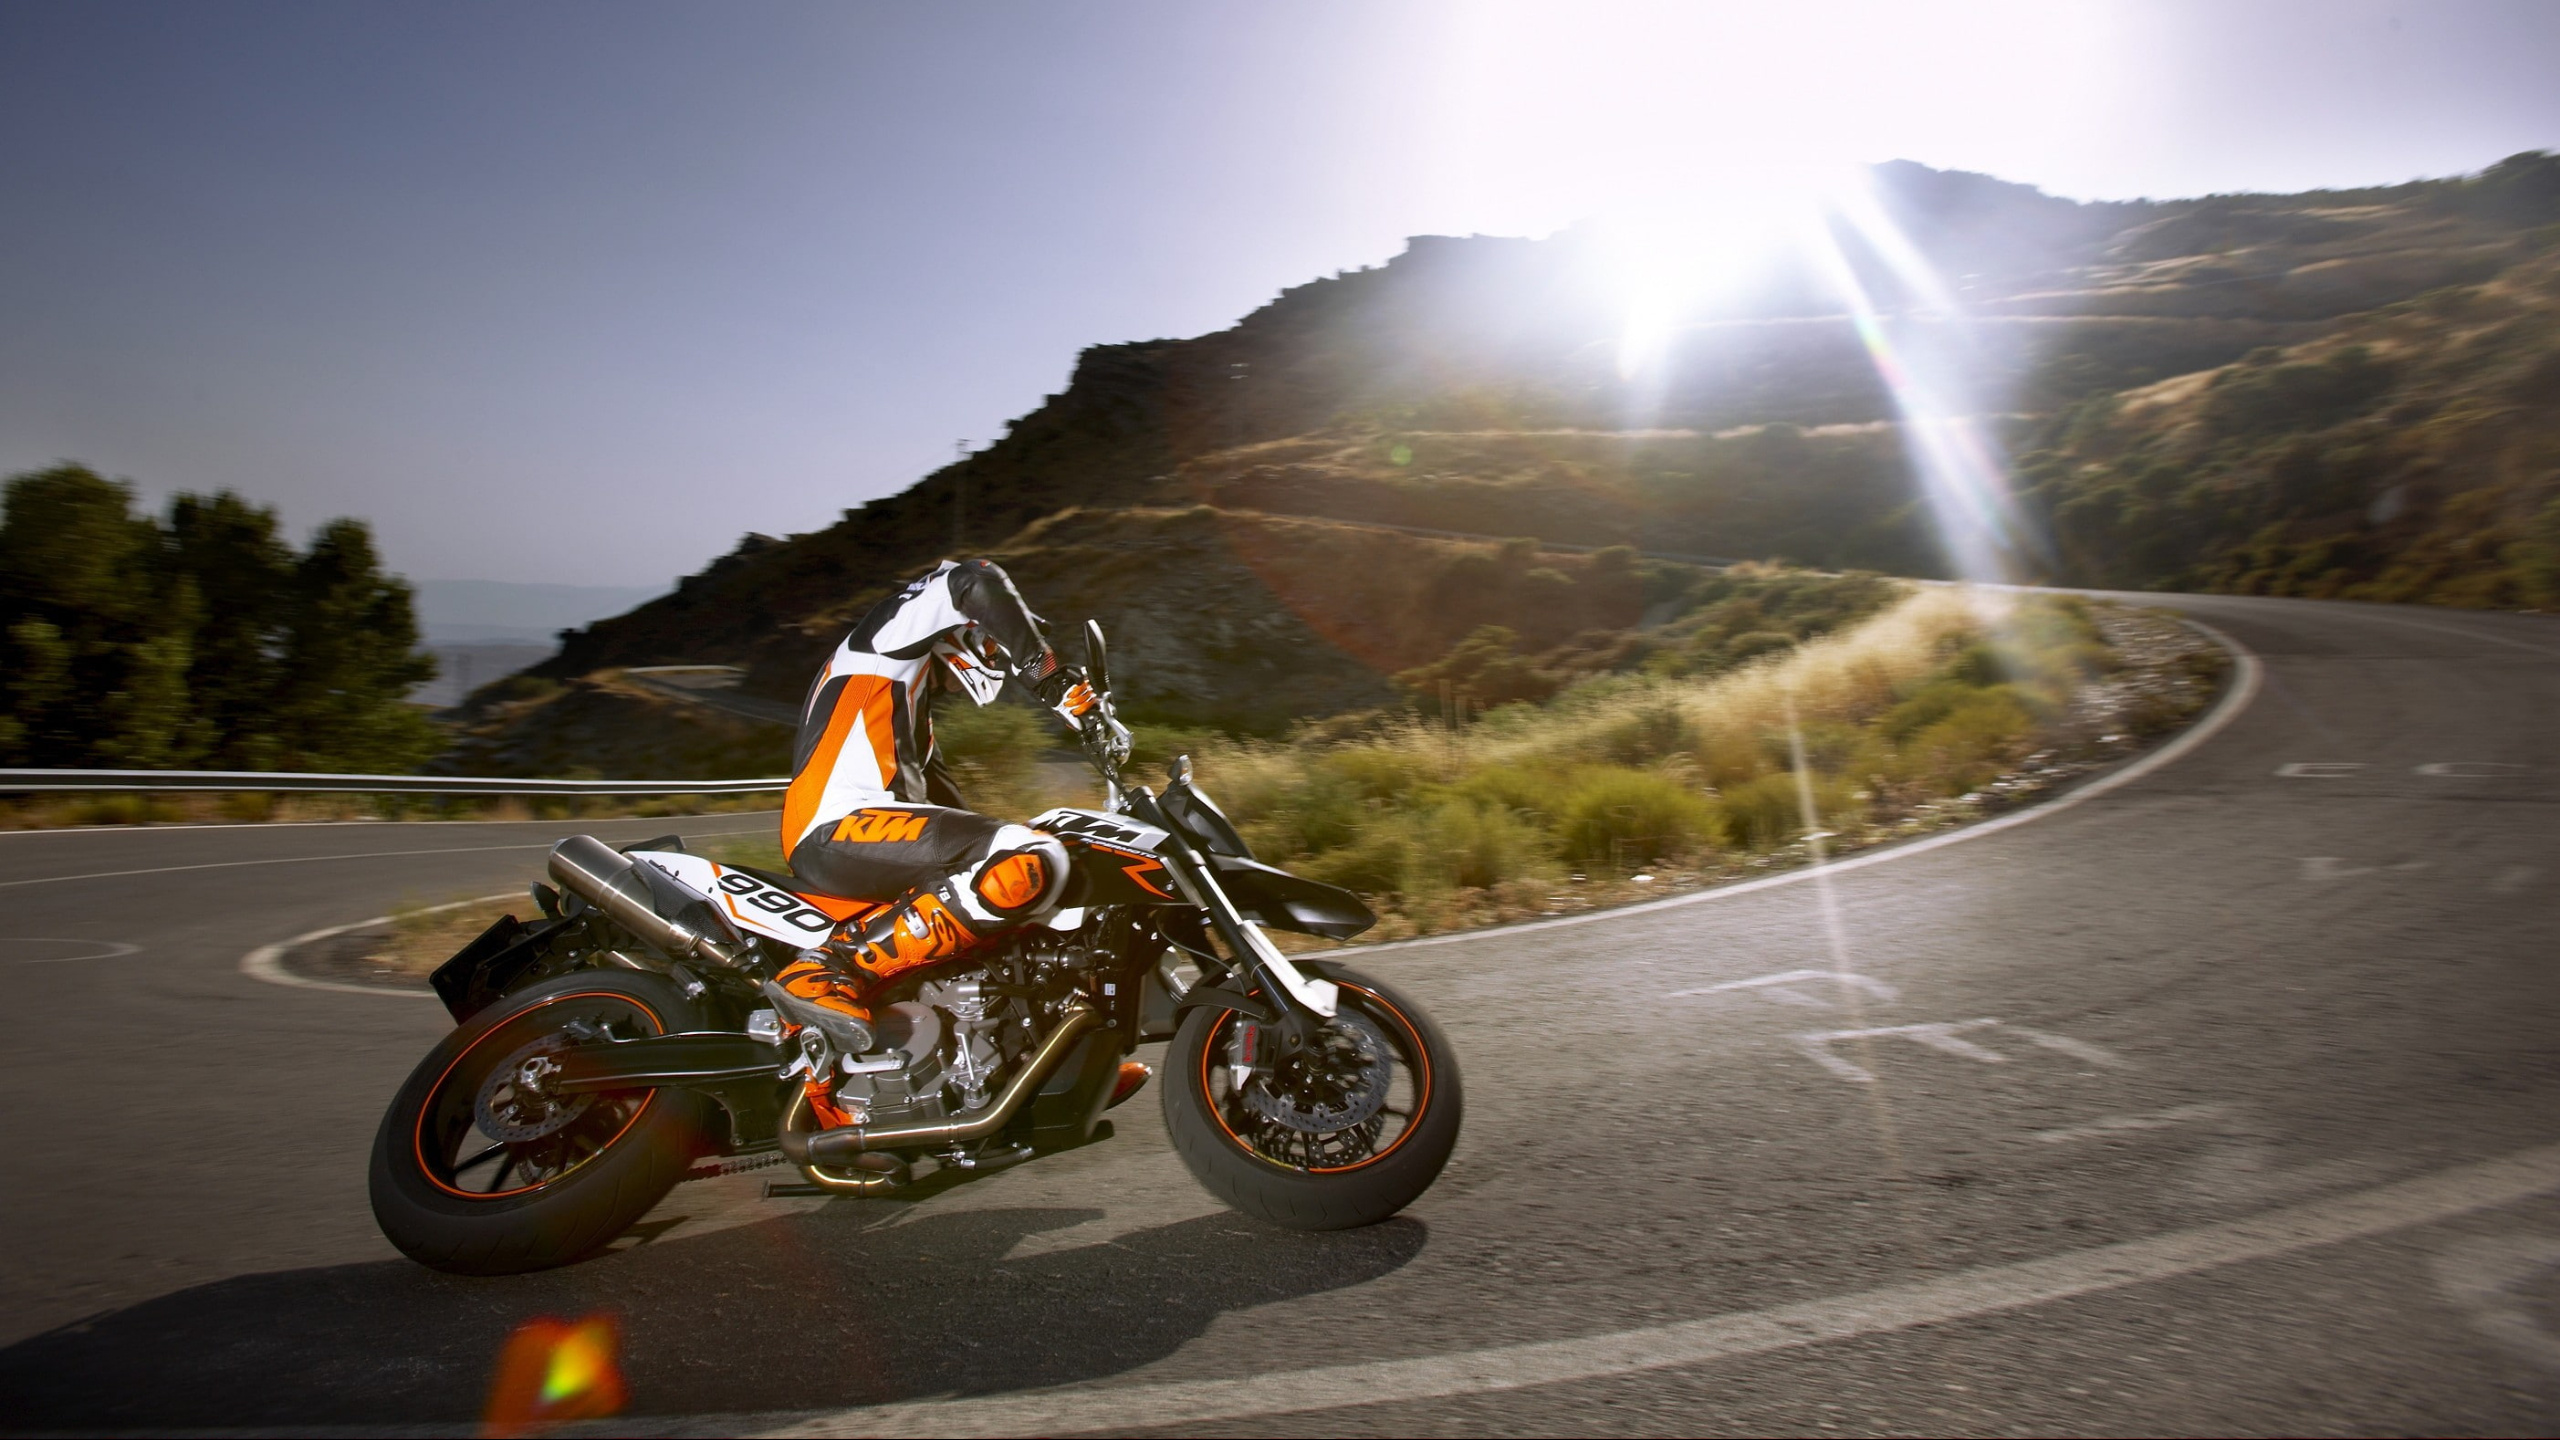 KTM supermoto wallpapers, Top backgrounds, Powerful motorcycles, Racing aesthetics, 2560x1440 HD Desktop